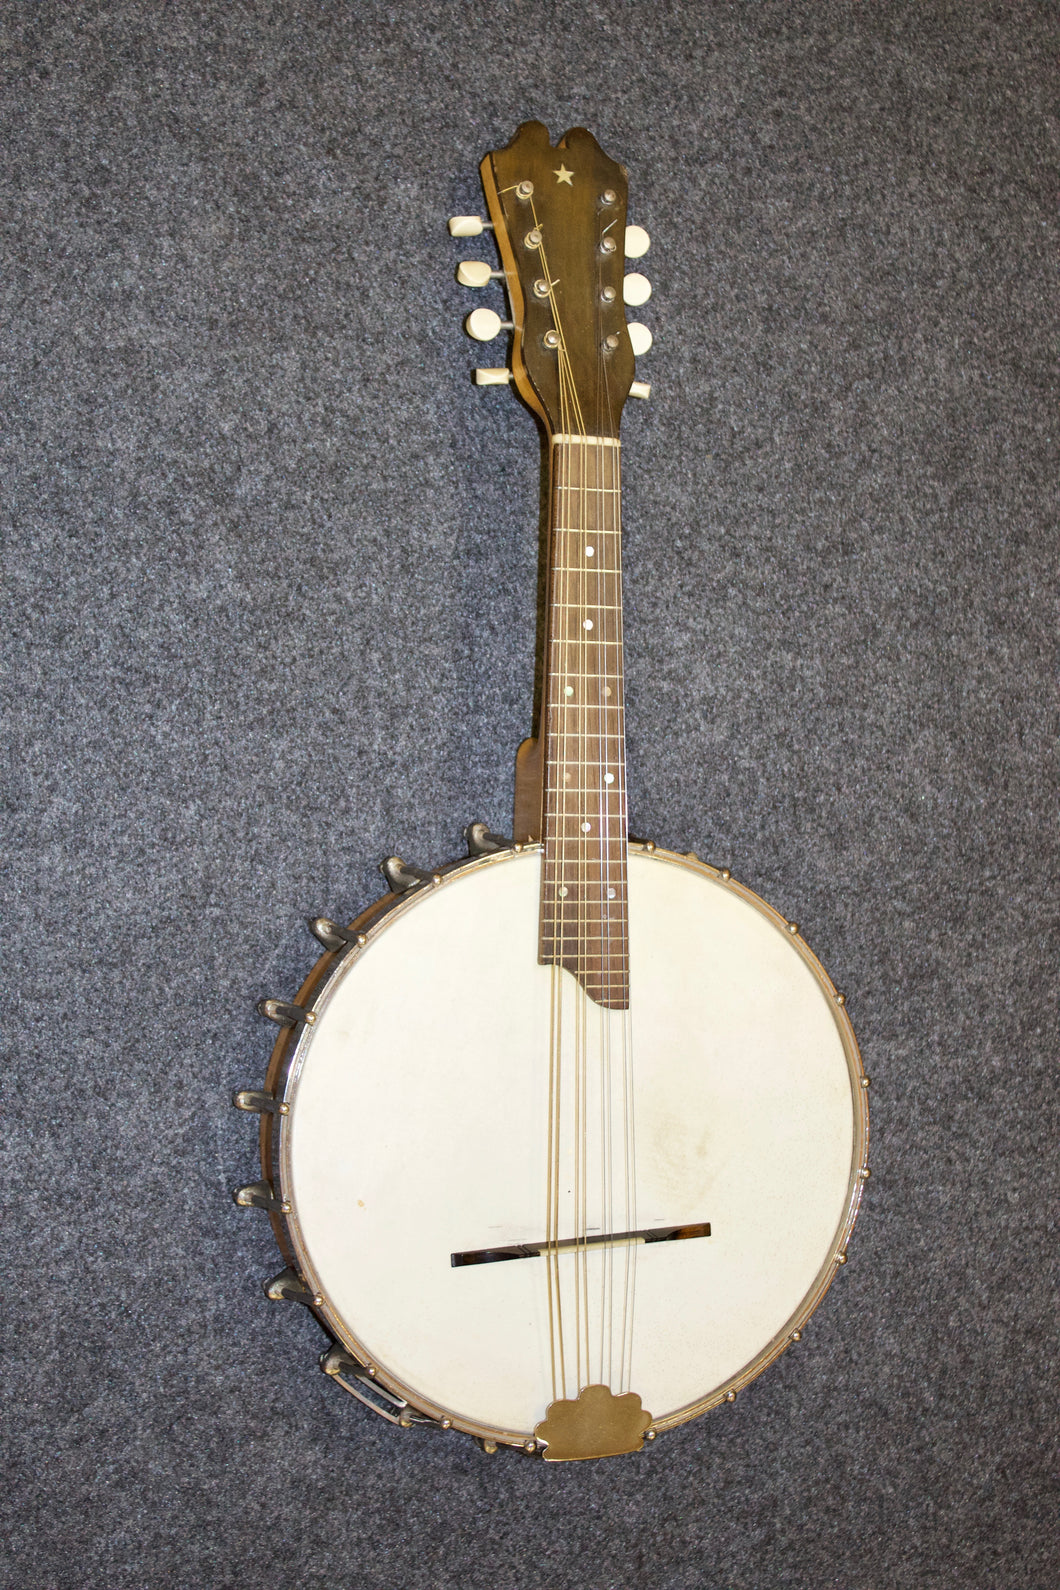 J. J. Levert Mandolin-Banjo c. 1920s - Jakes Main Street Music